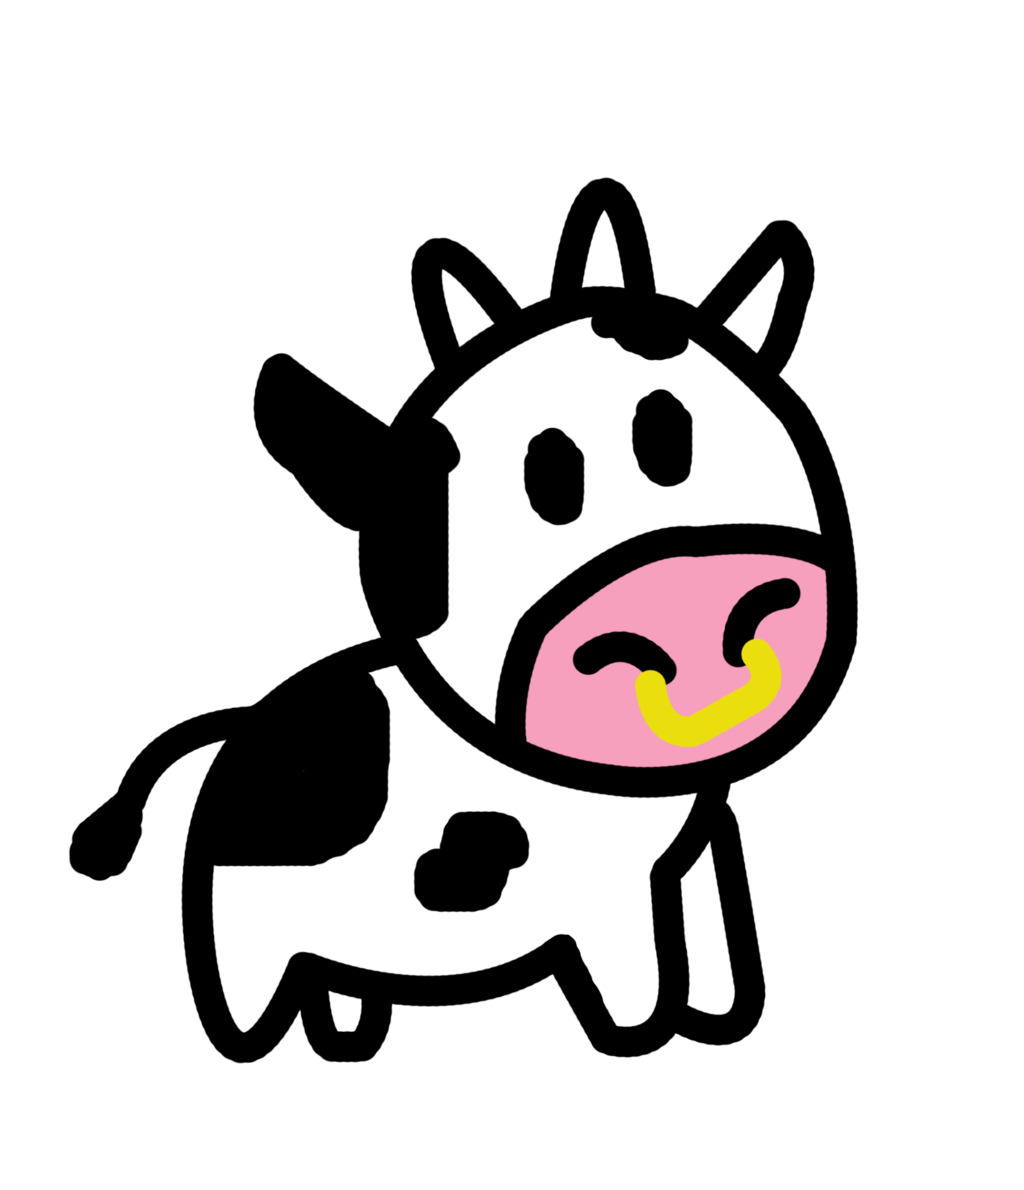 Cartoon Cow Image - ClipArt Best